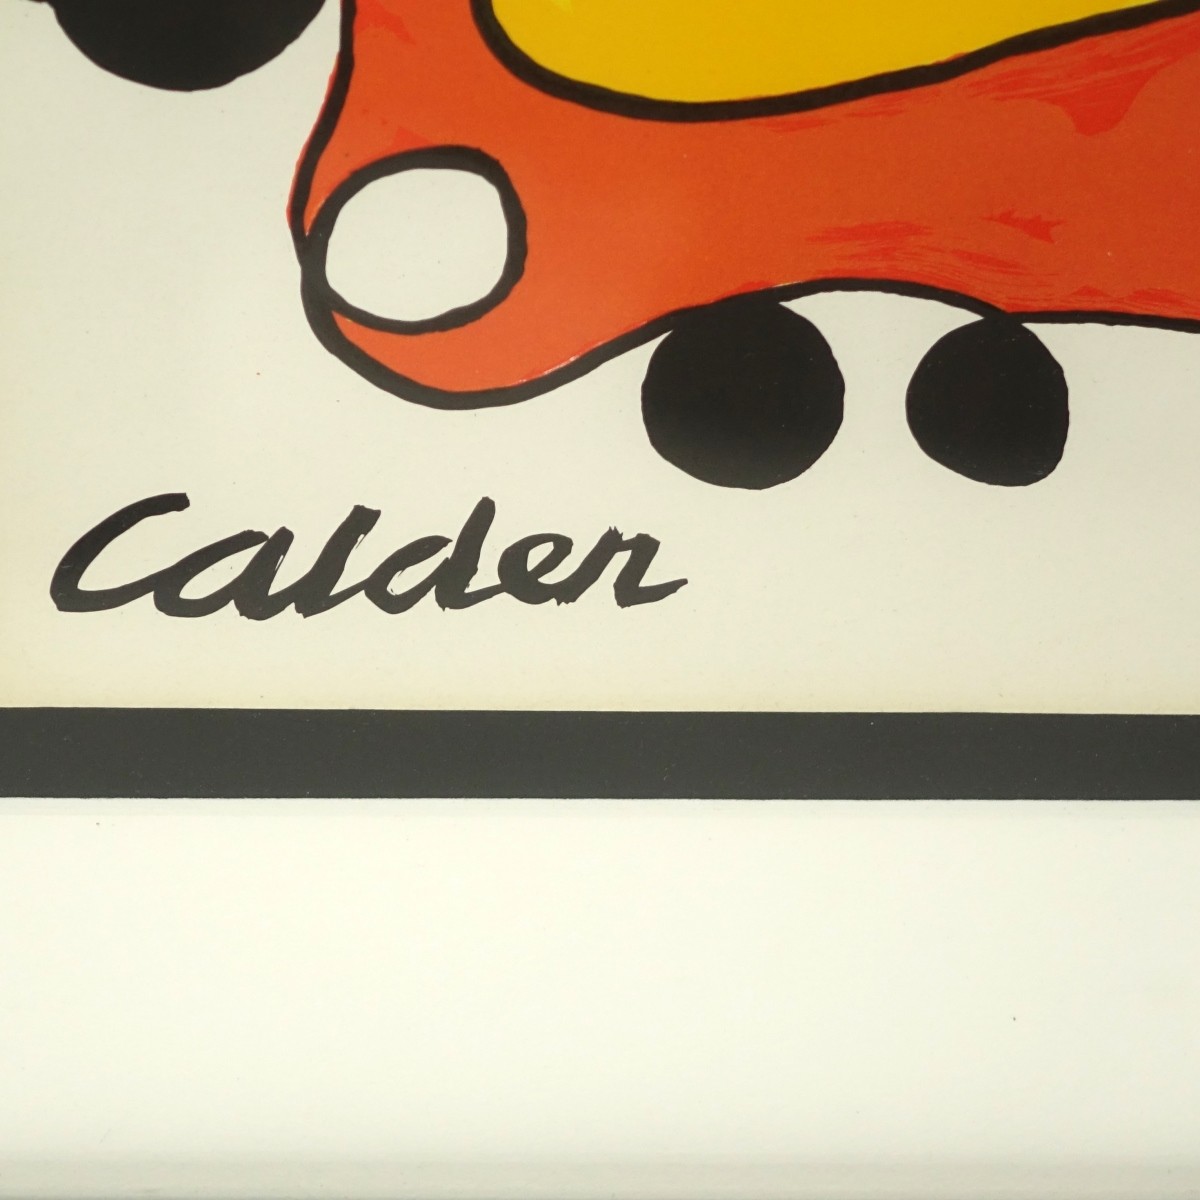 Three (3) Alexander Calder (1898 - 1976) Prints